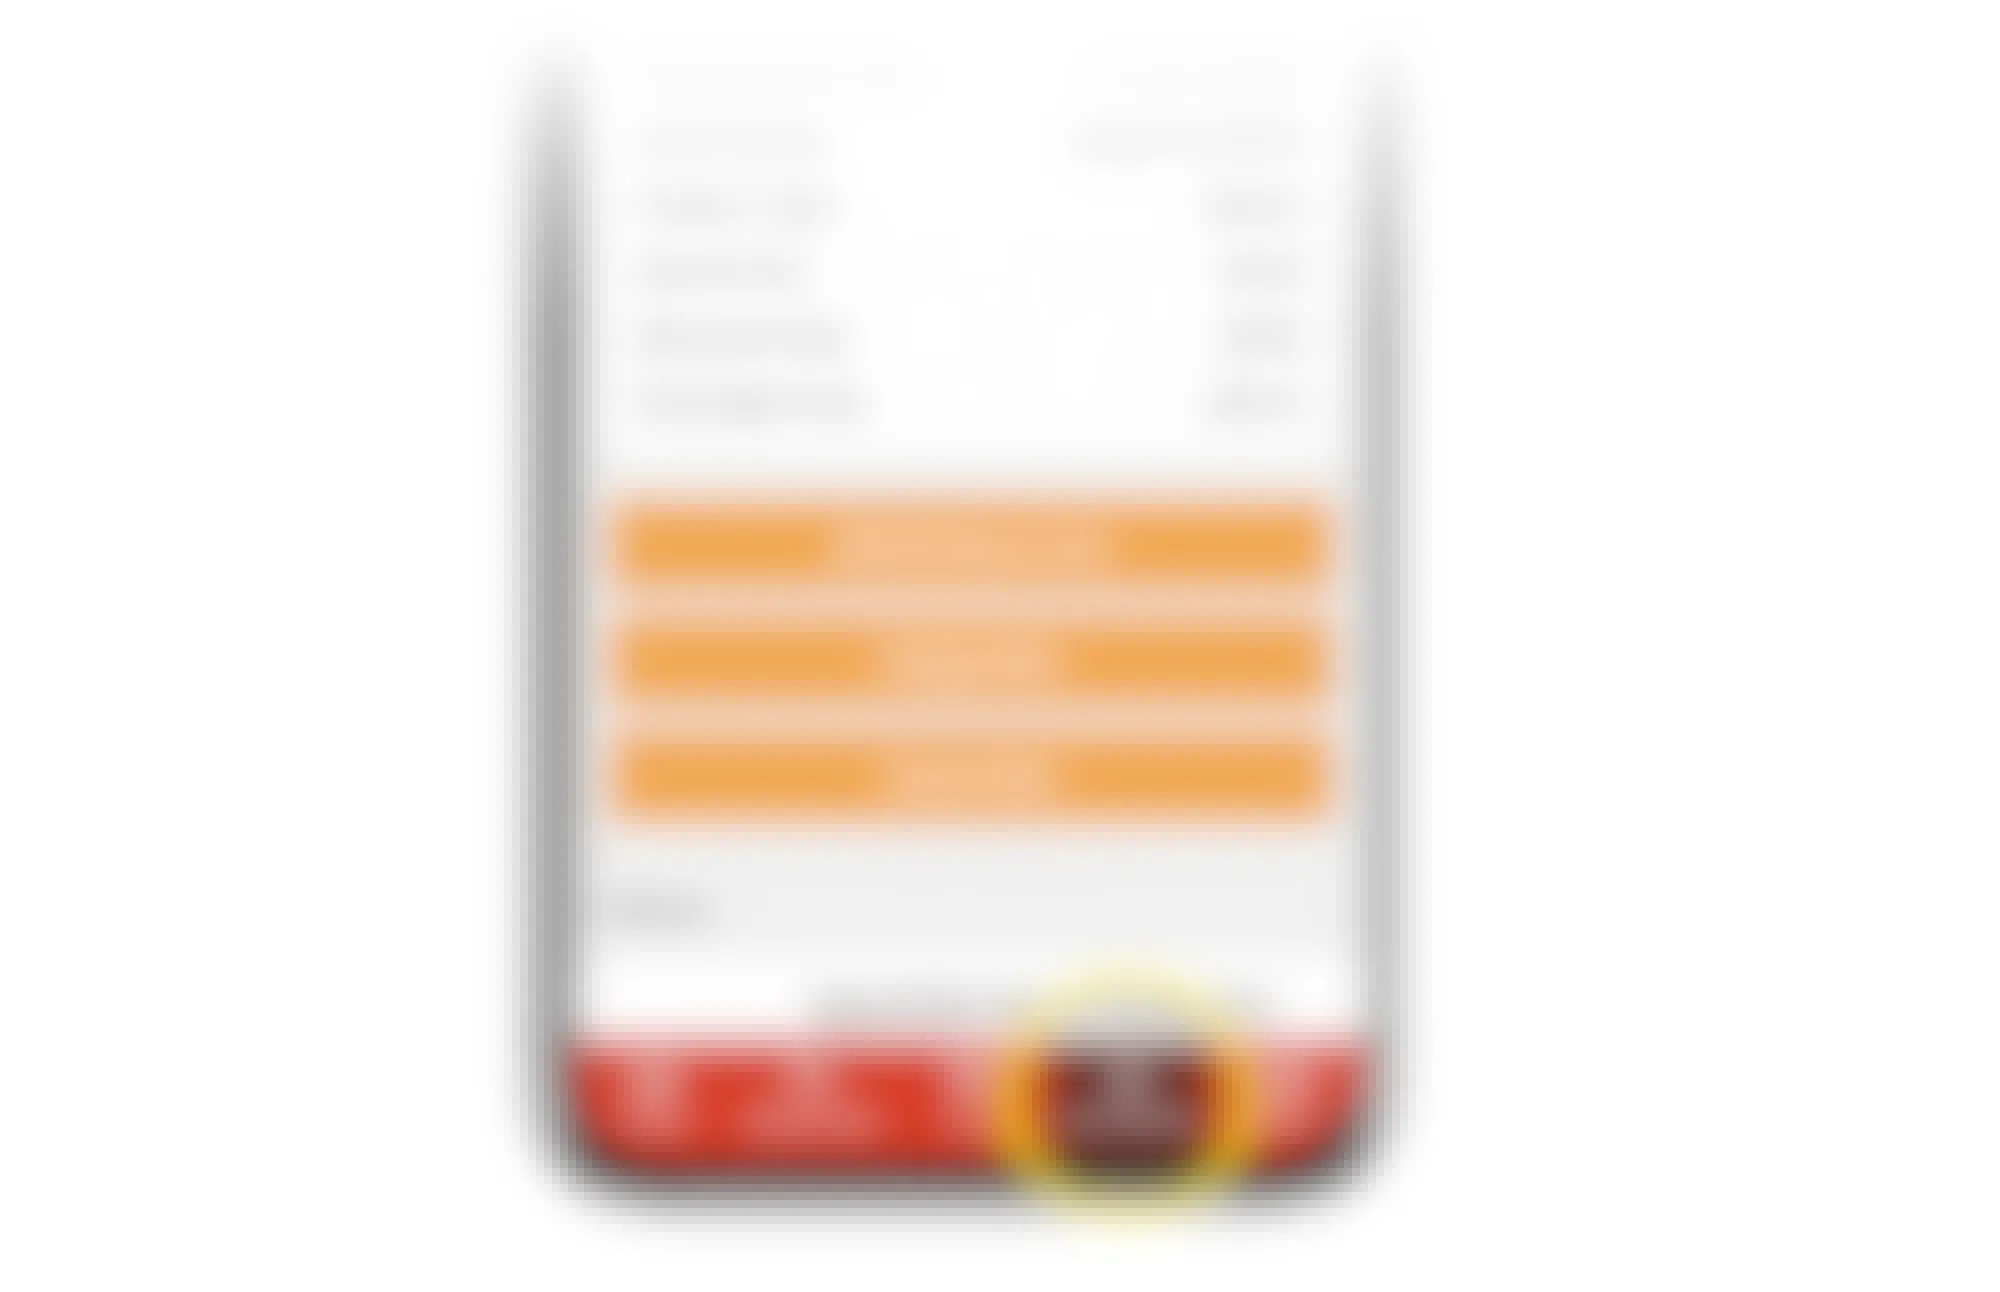 phone screen showing shoprite app with My ShopRite menu item circled in yellow